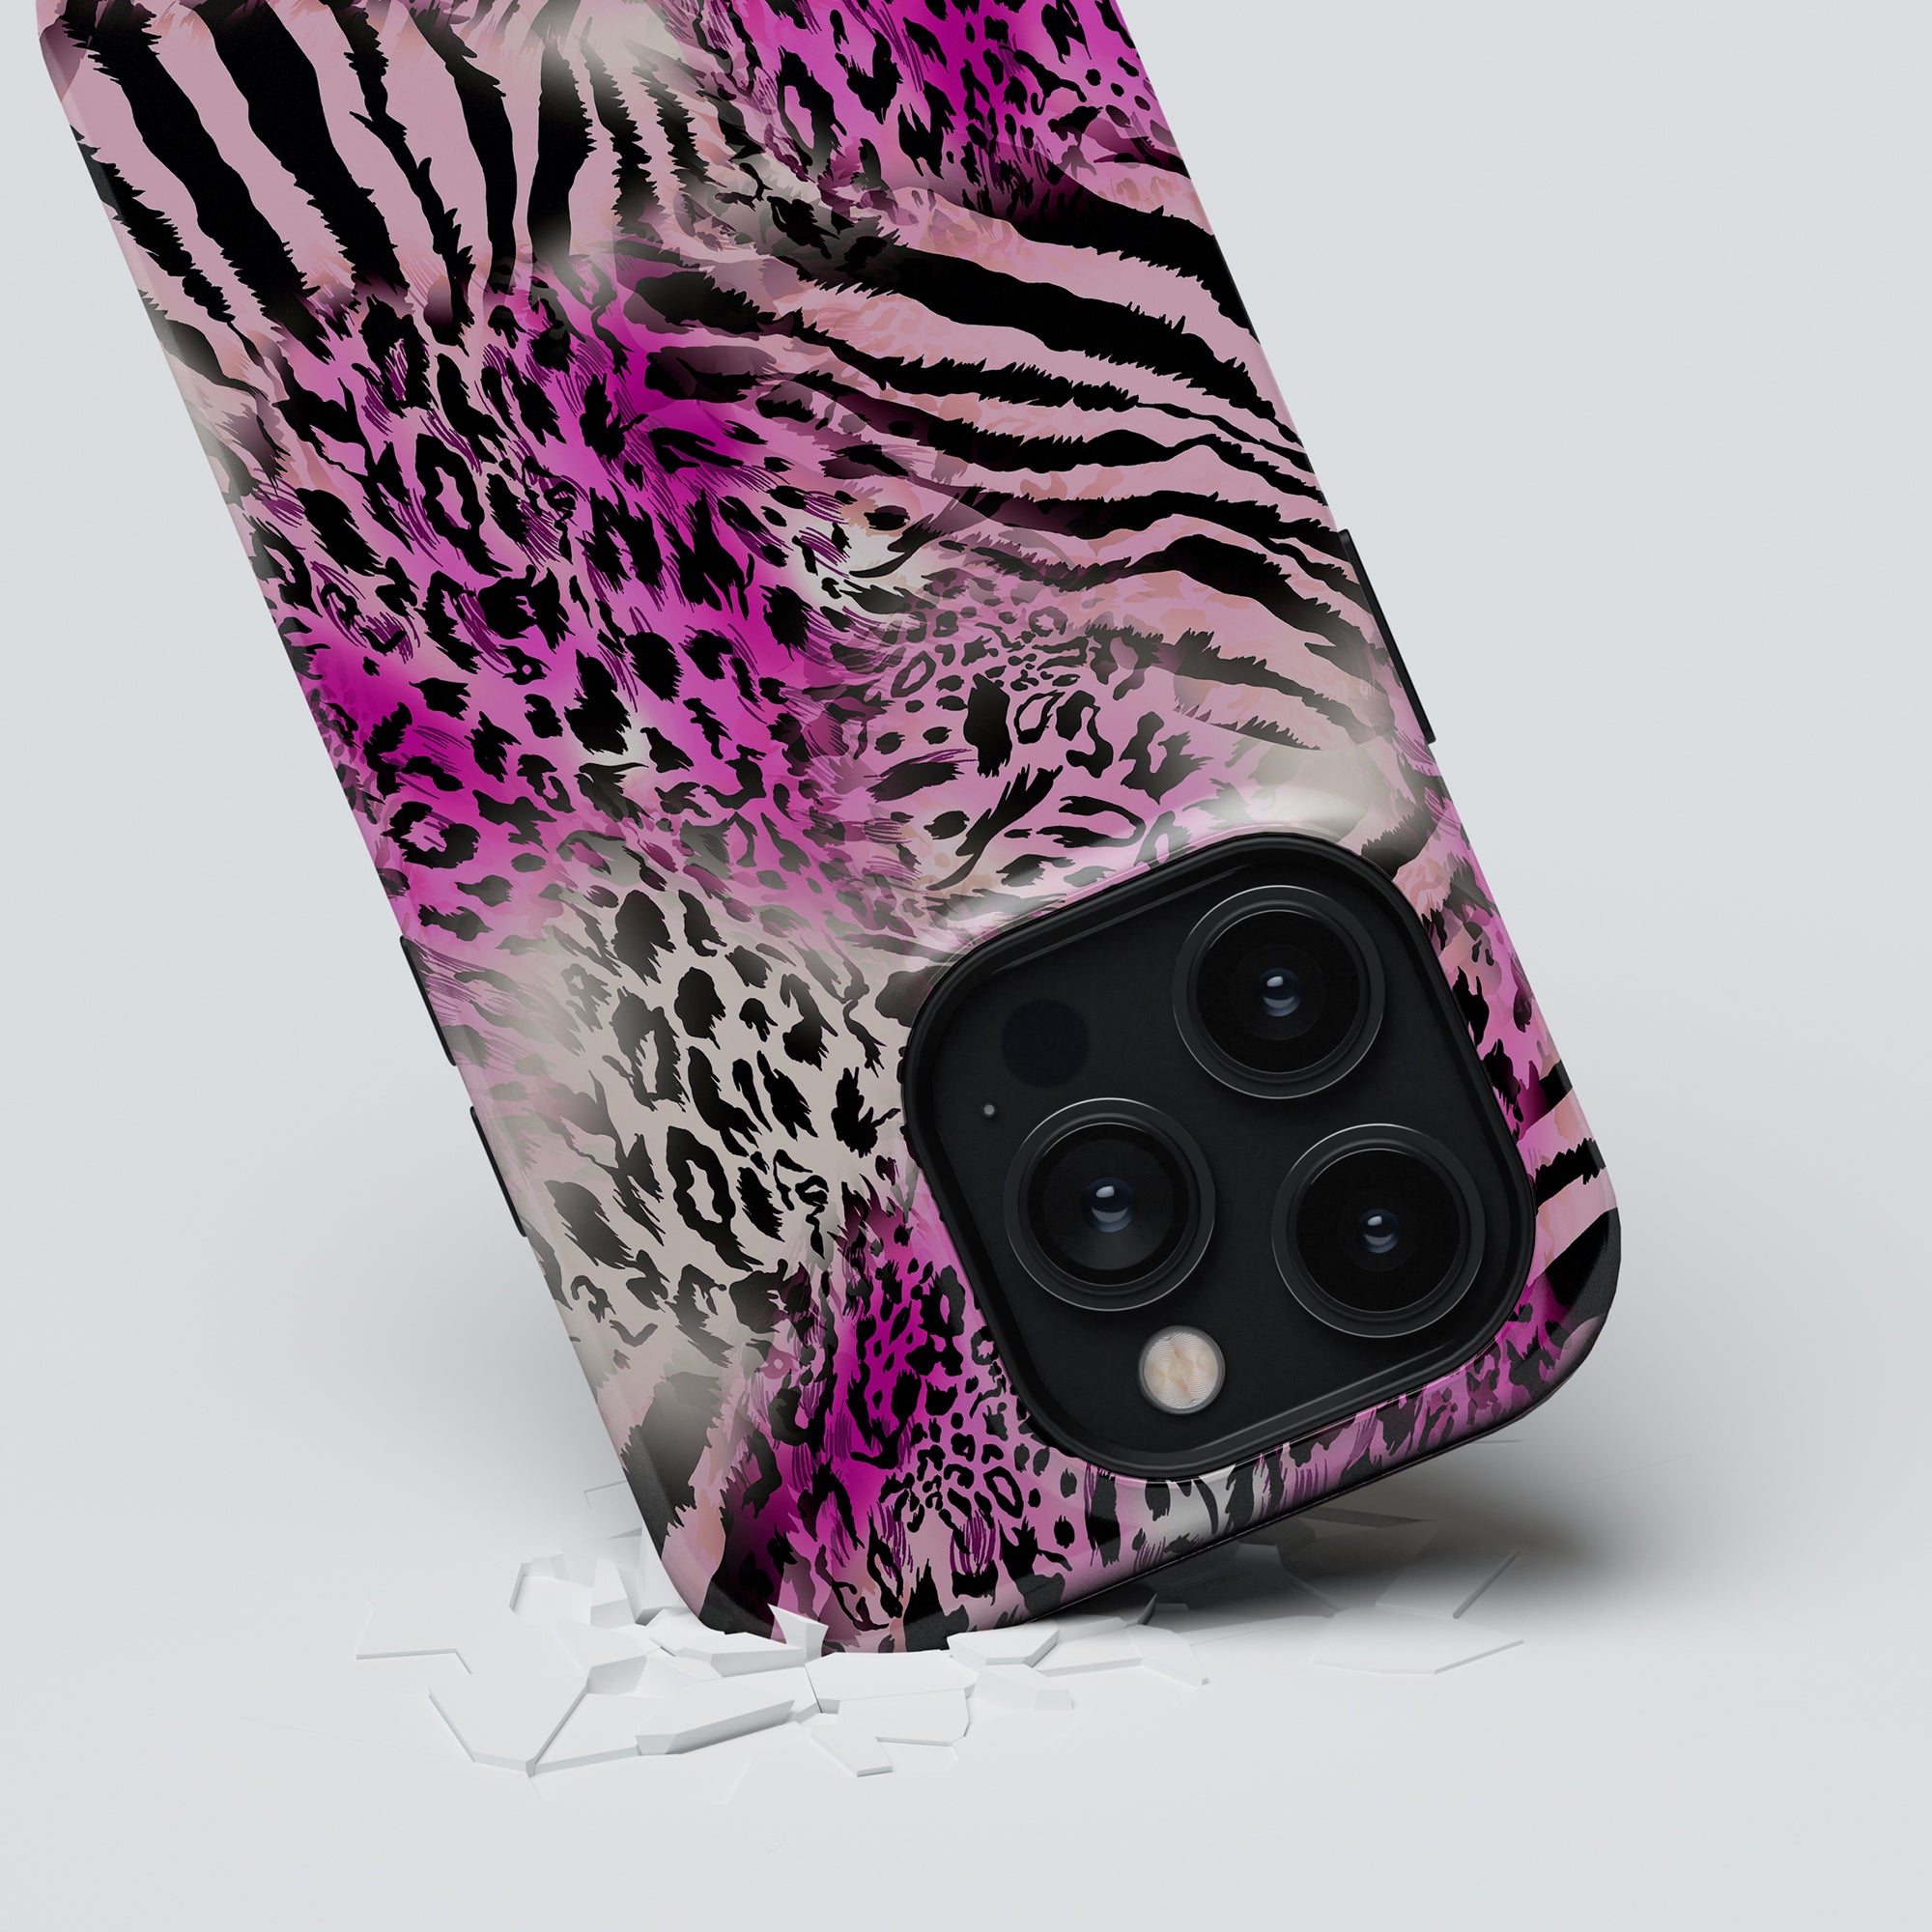 A Savannah Fuchsia - Tough Case with a pink and black zebra print.